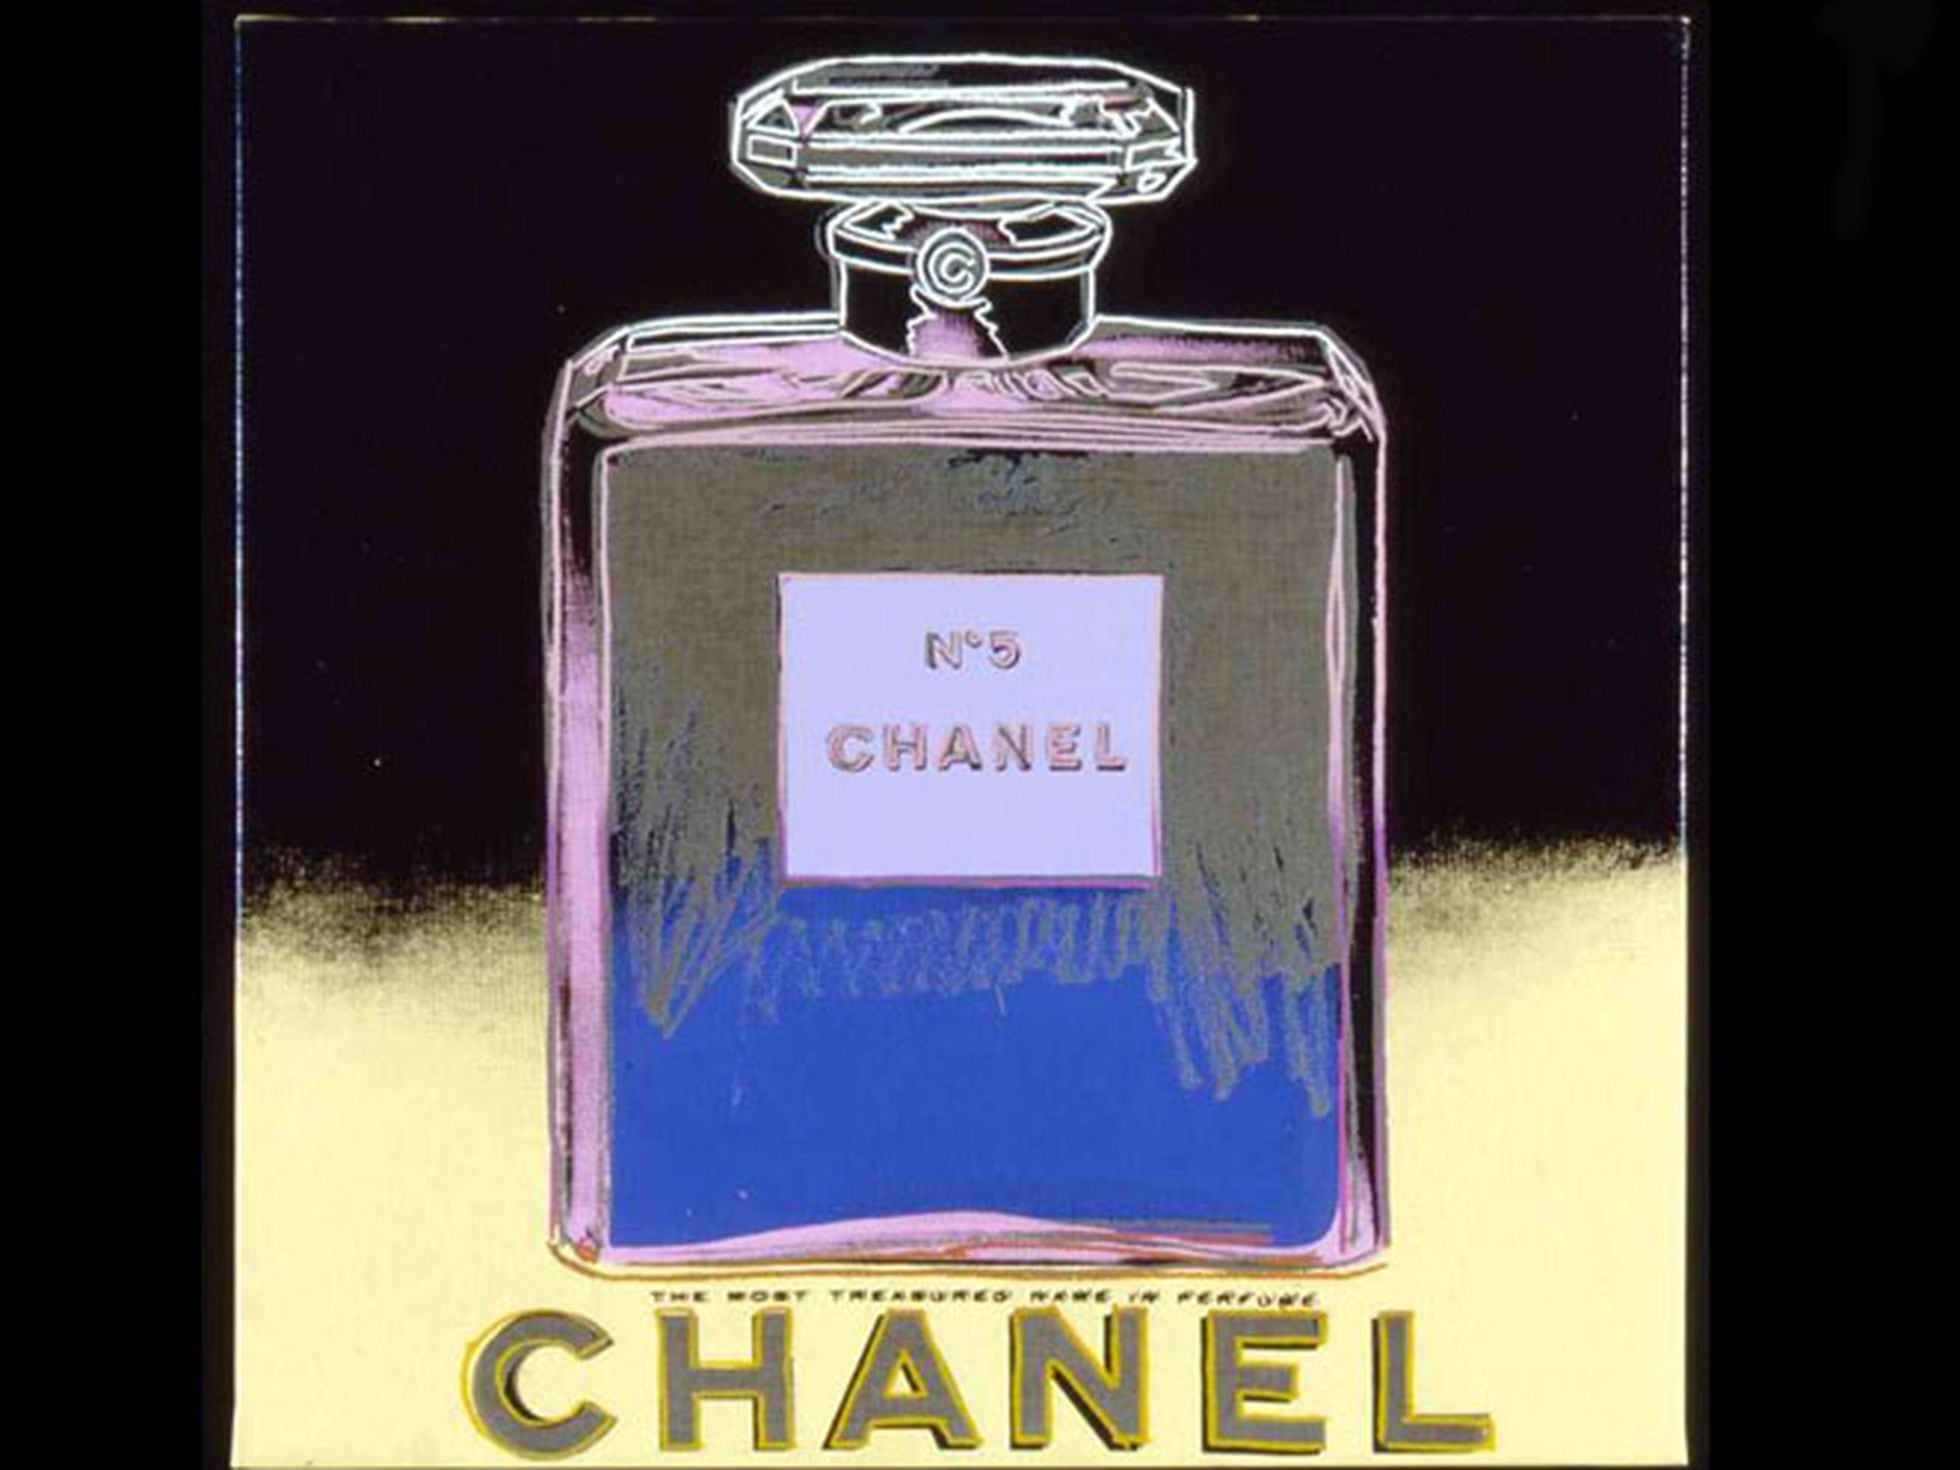 Chanel No 5 Parfum Chanel аромат — аромат для женщин 1921